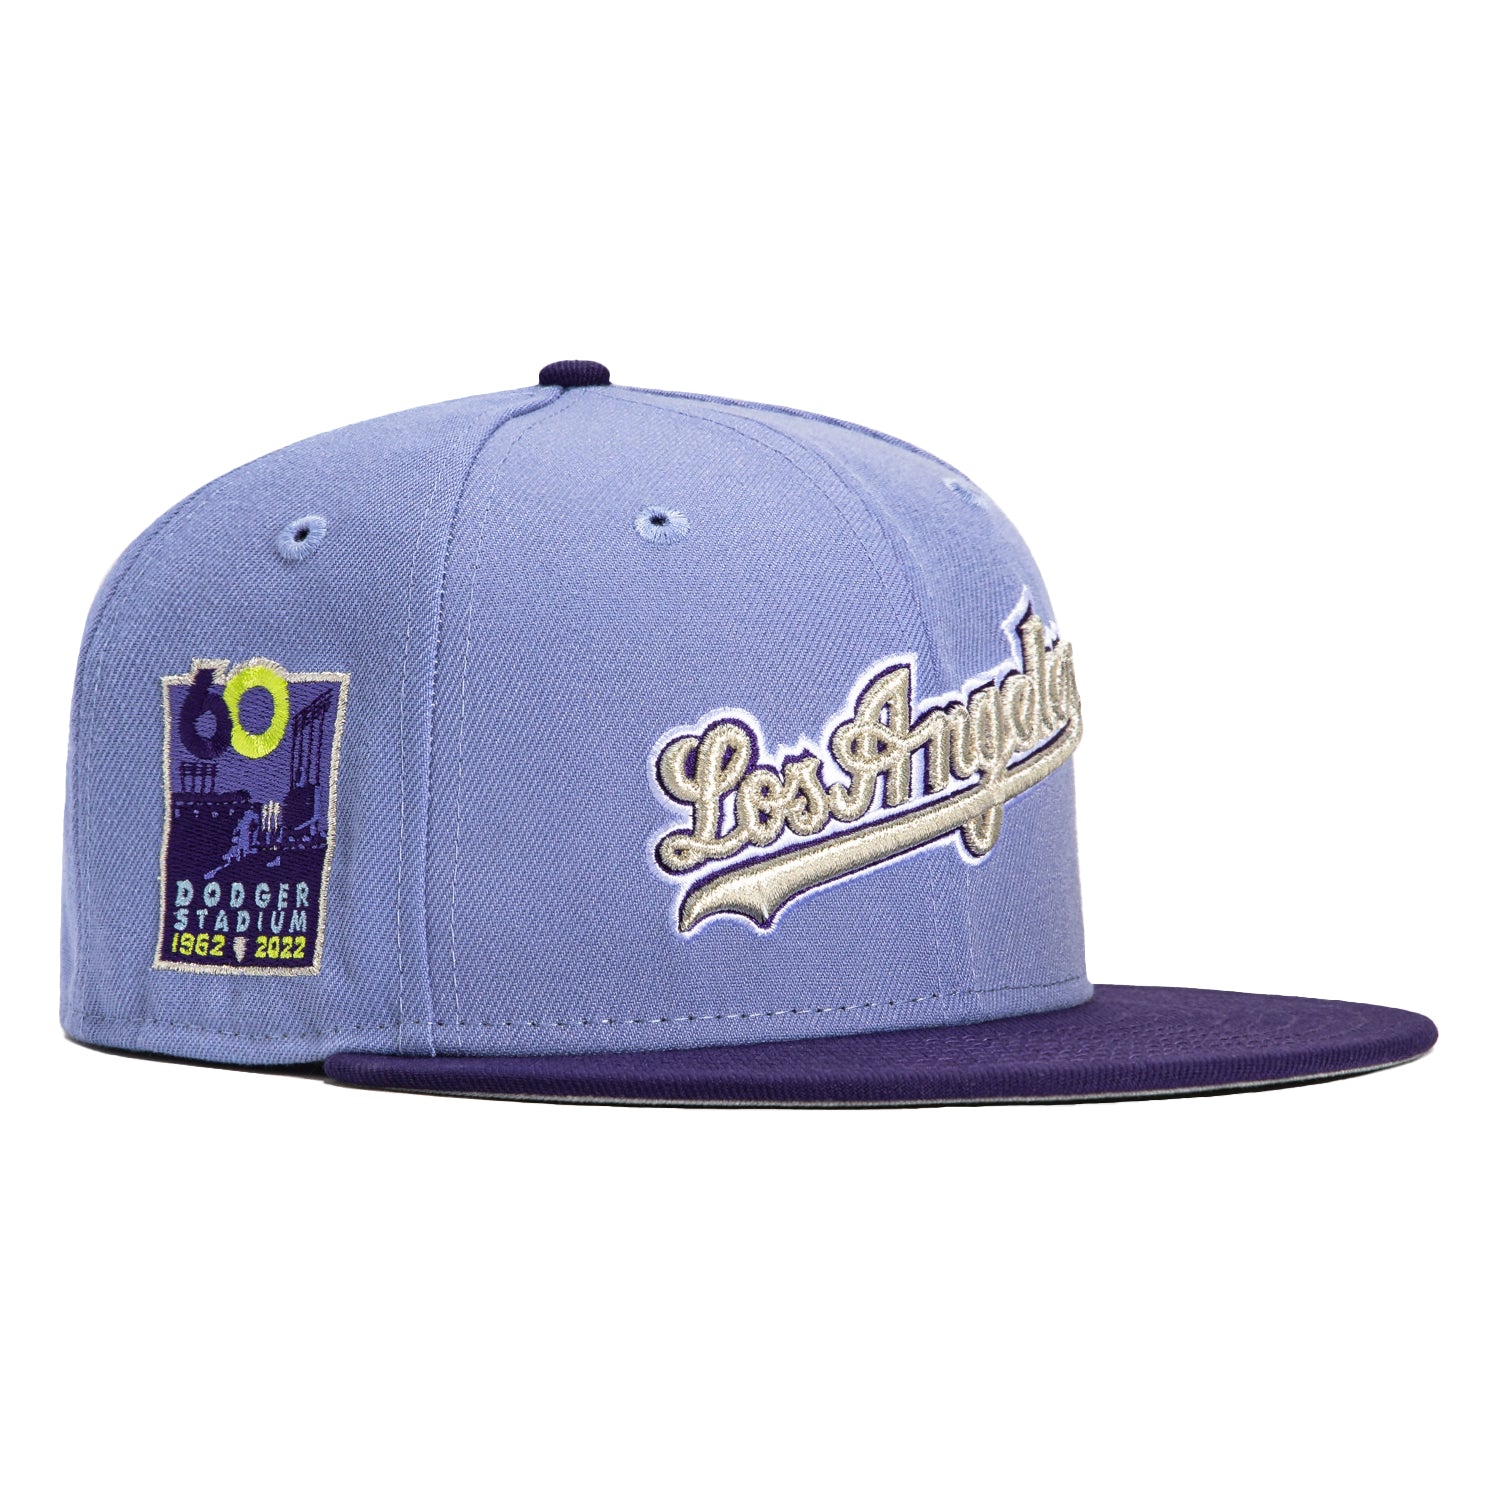 New Era 59FIFTY Los Angeles Dodgers 60th Anniversary Stadium Patch Hat - Lavender, Purple Lavender/Purple / 7 1/8